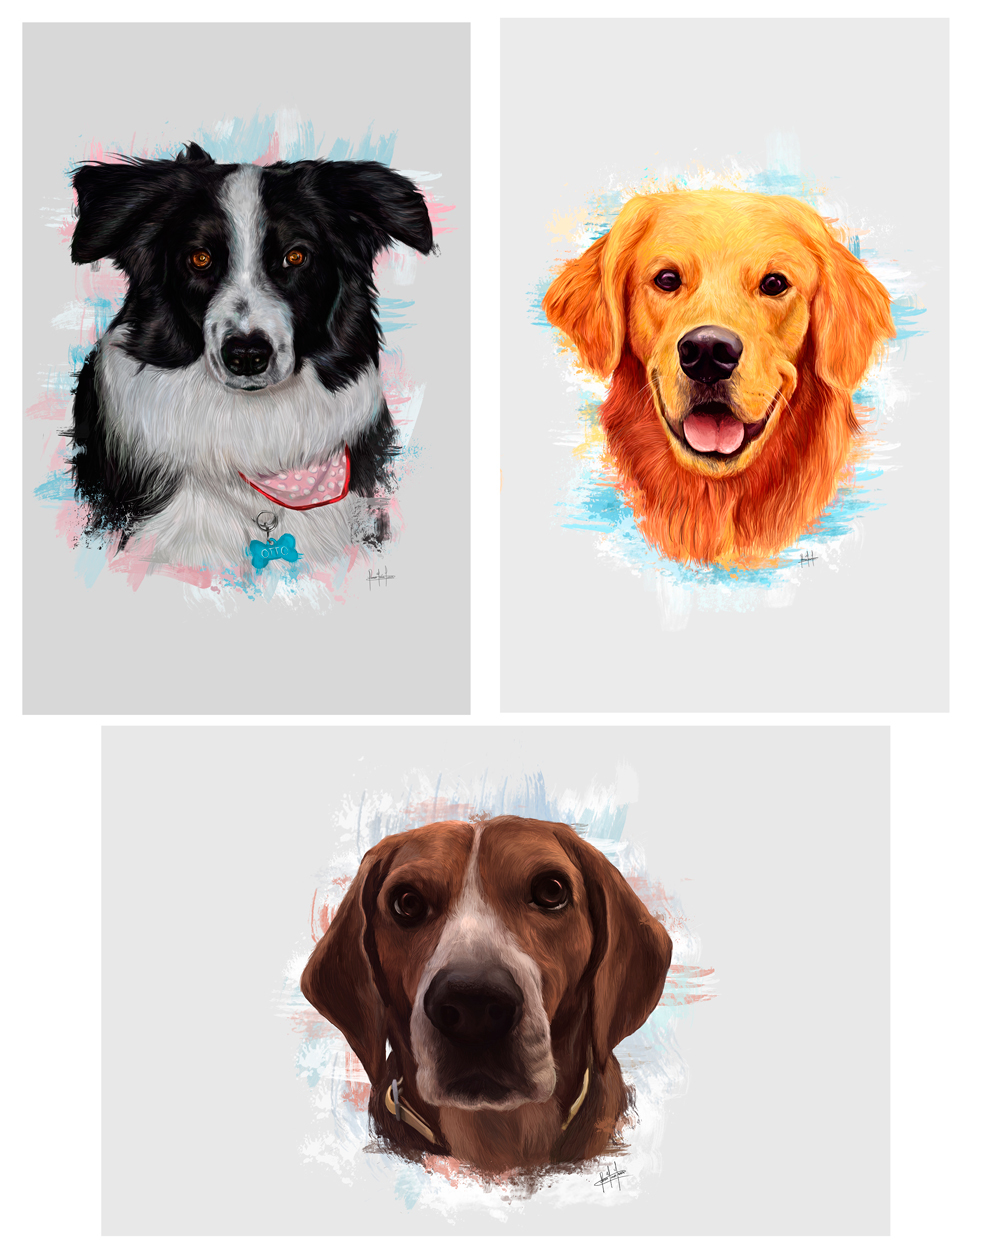 dog perros perro animal Pet Mascota portrait photoshop digital paint wacom draw